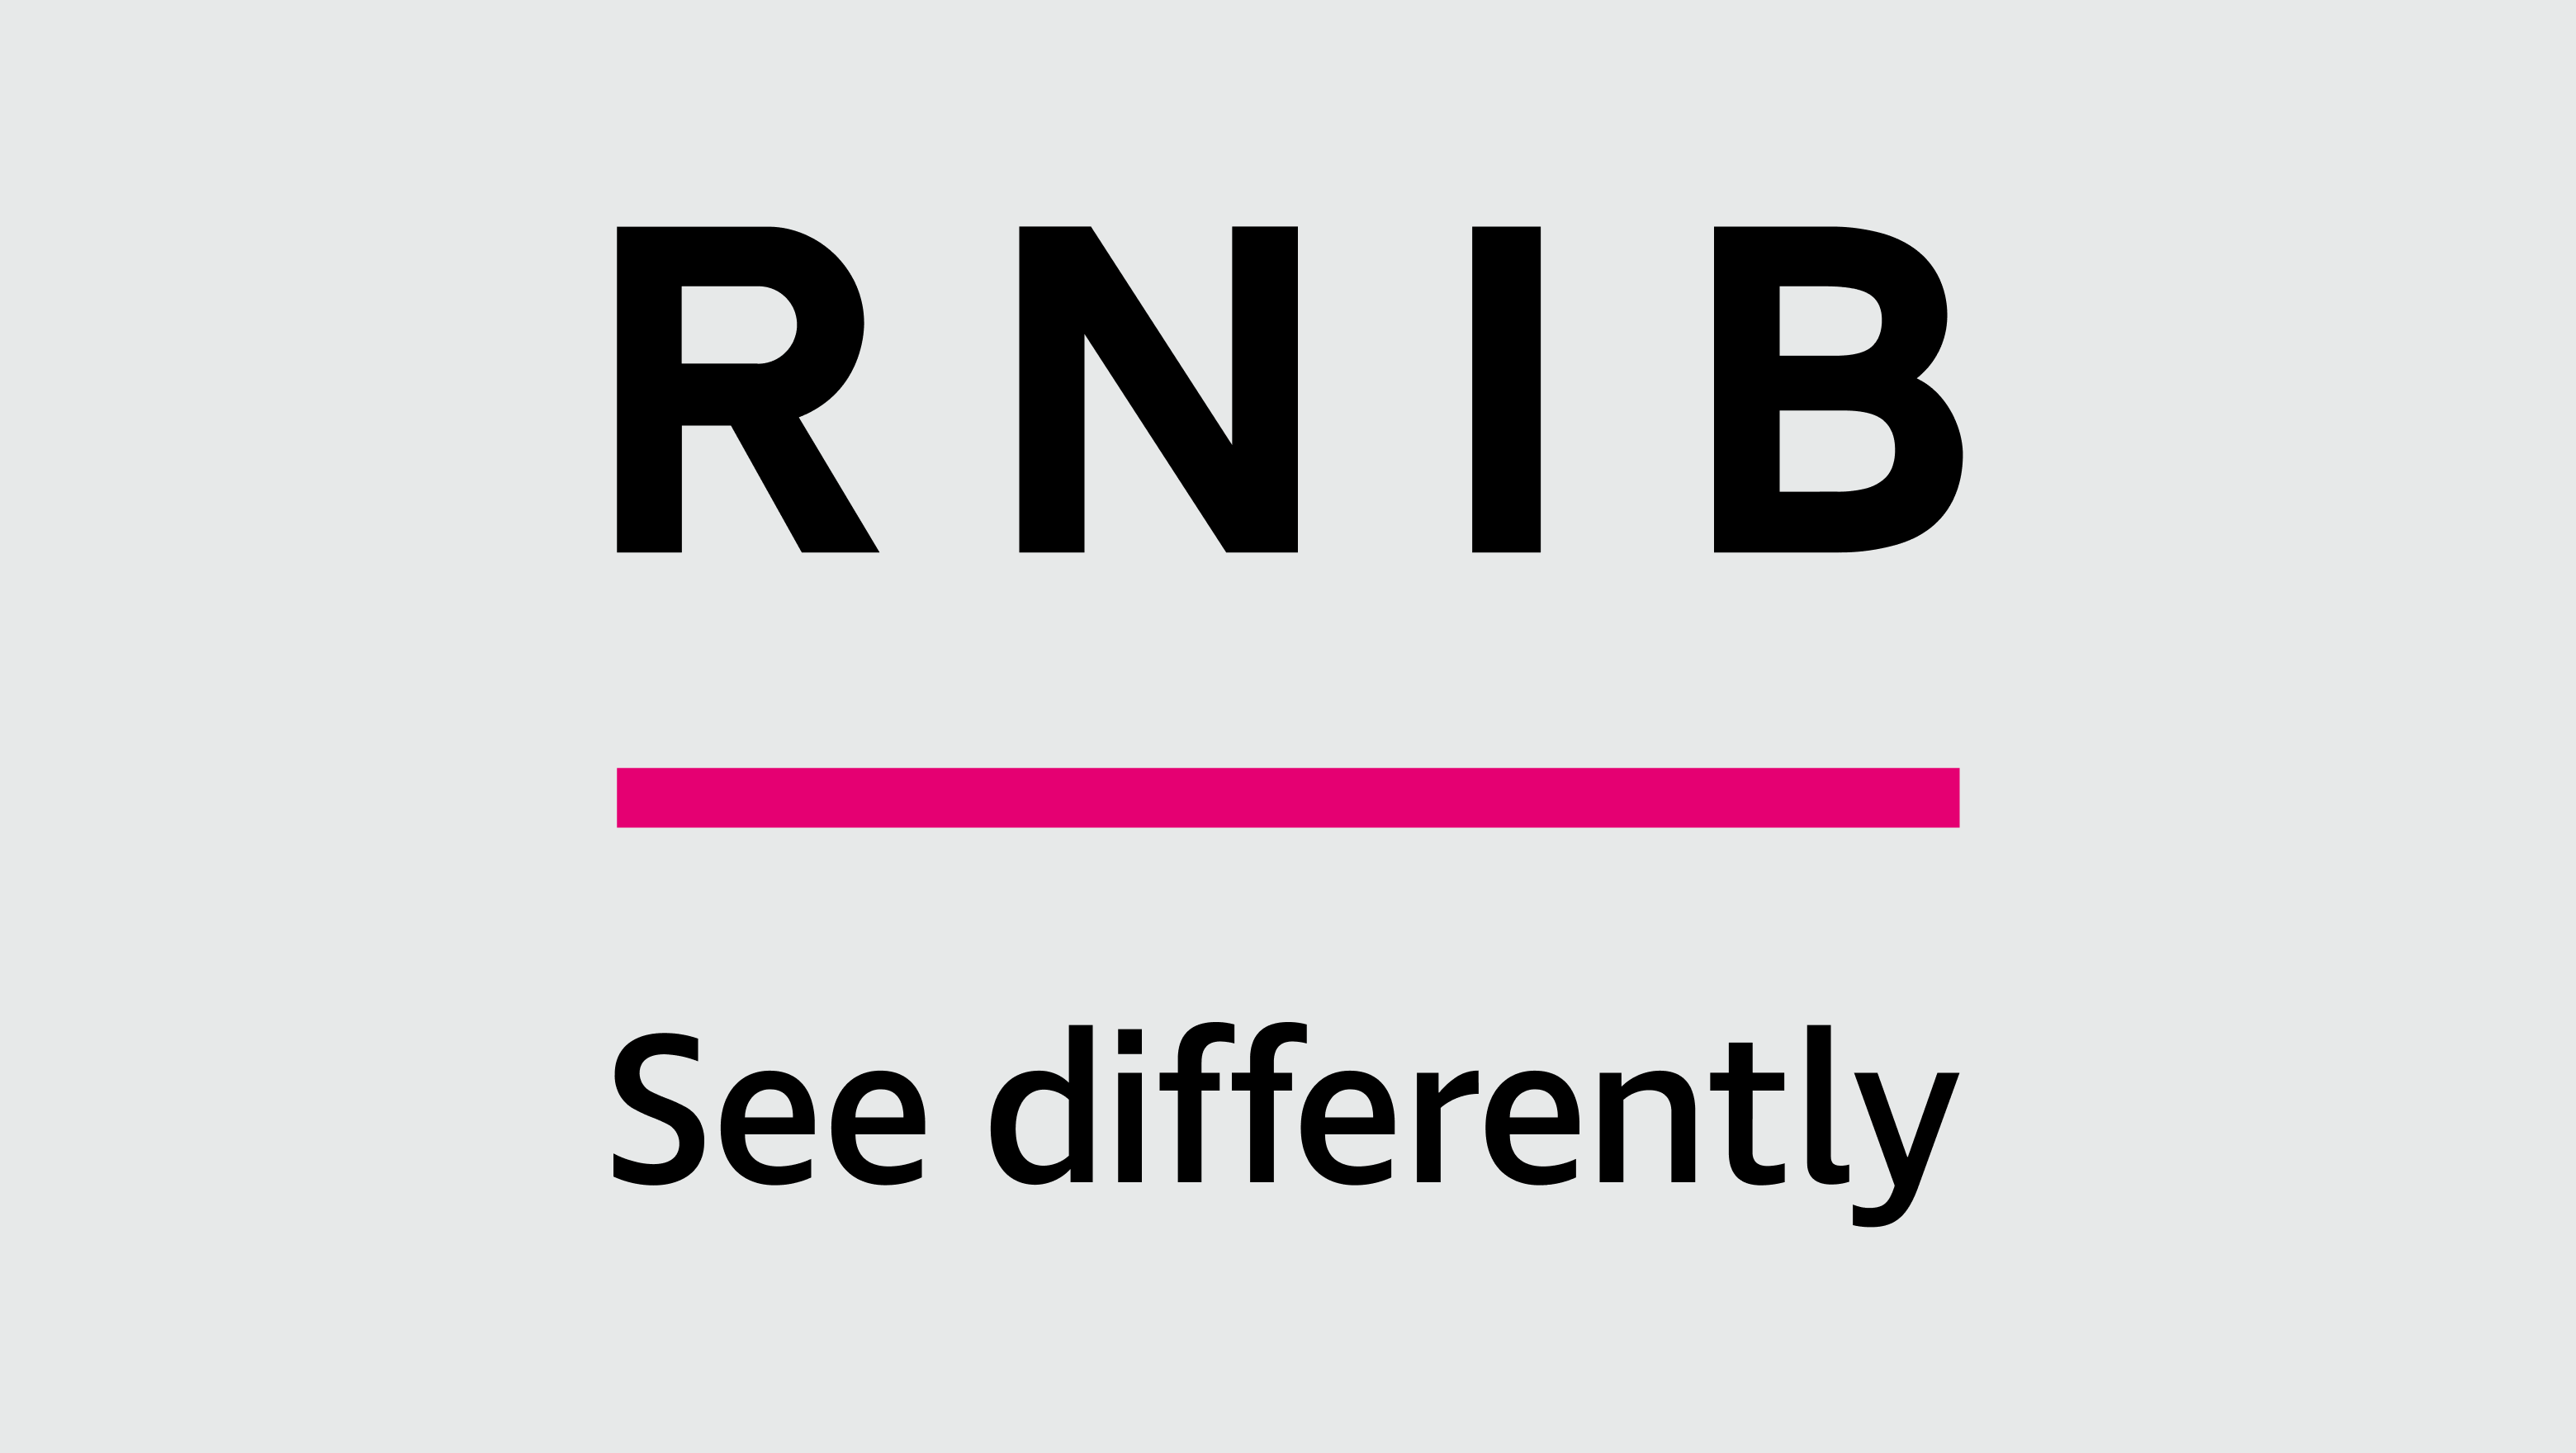 RNIB - See Differently